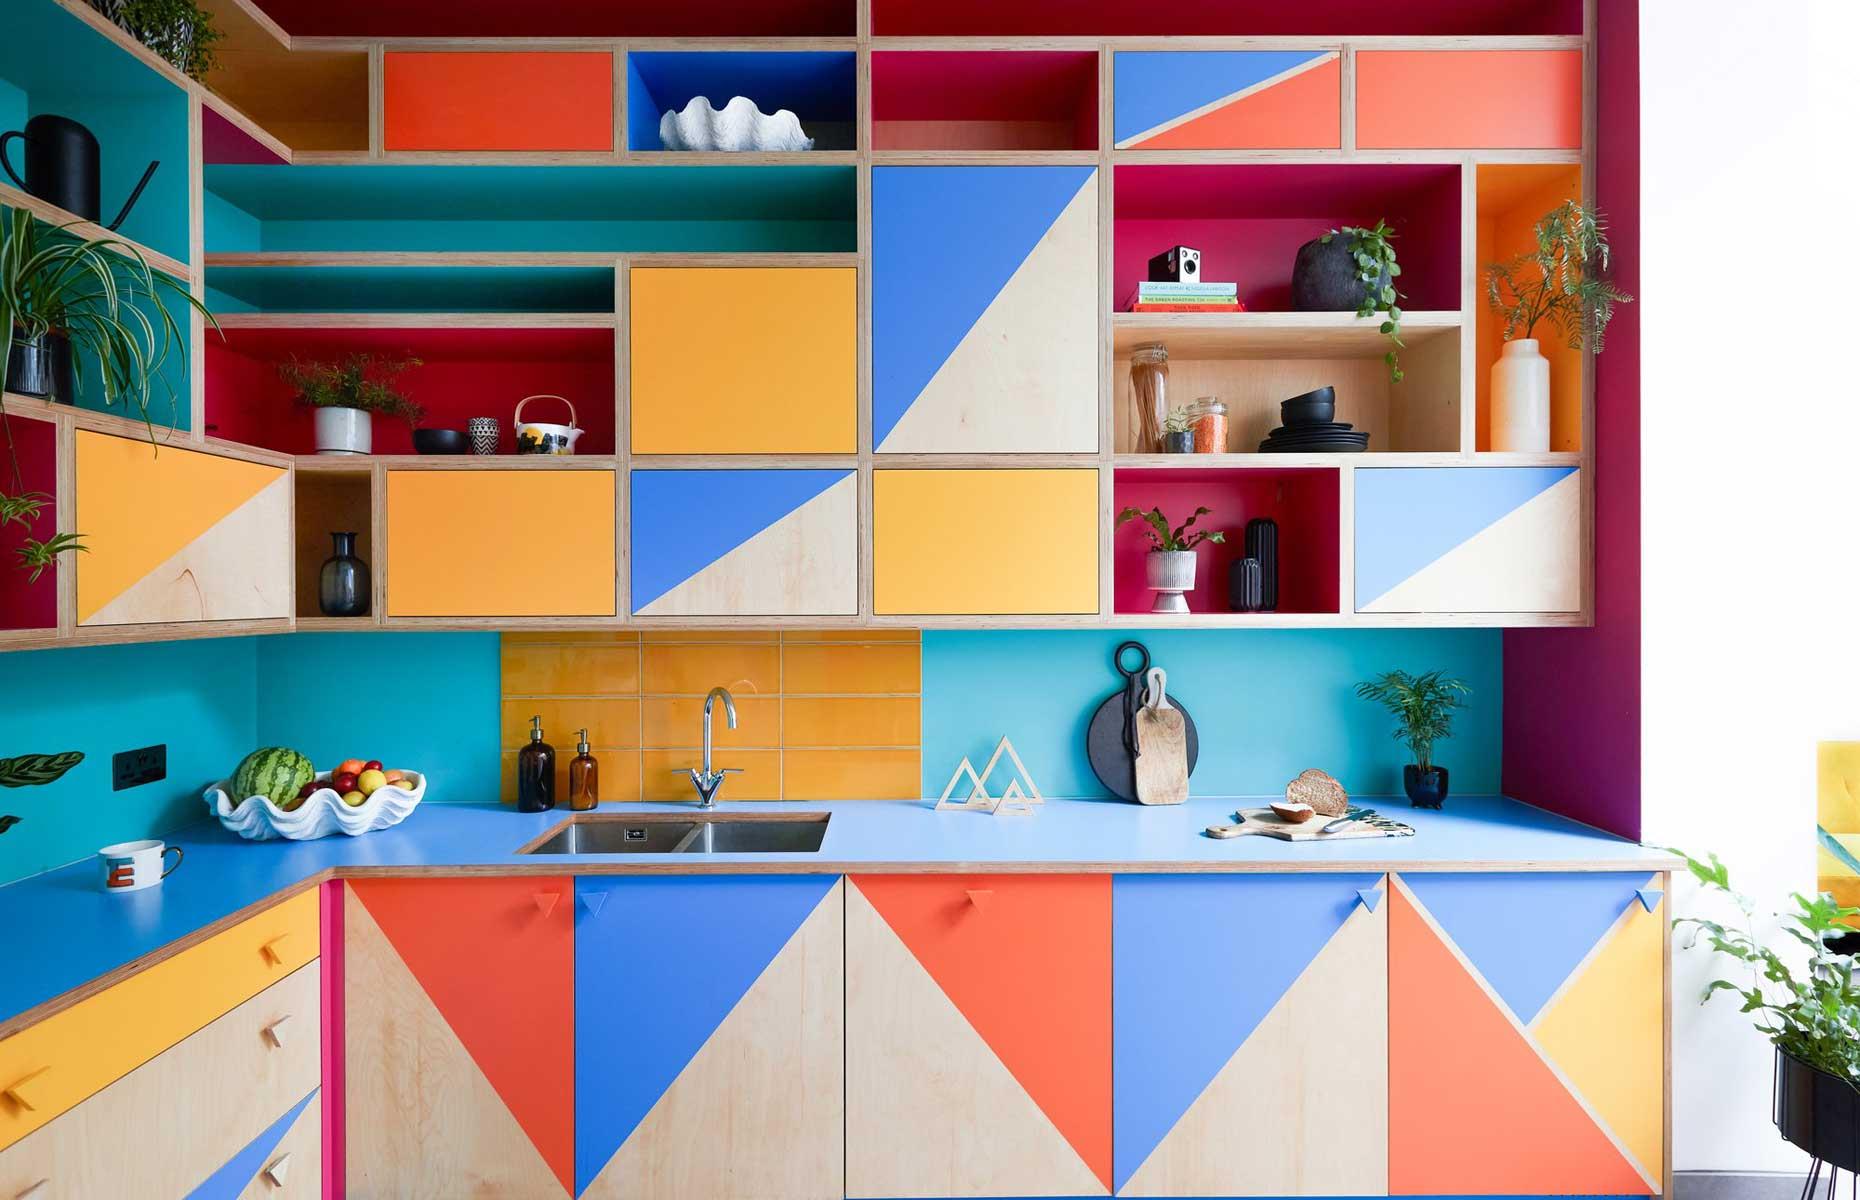 Colorful kitchen ideas – 12 design-led ways to brighten a kitchen